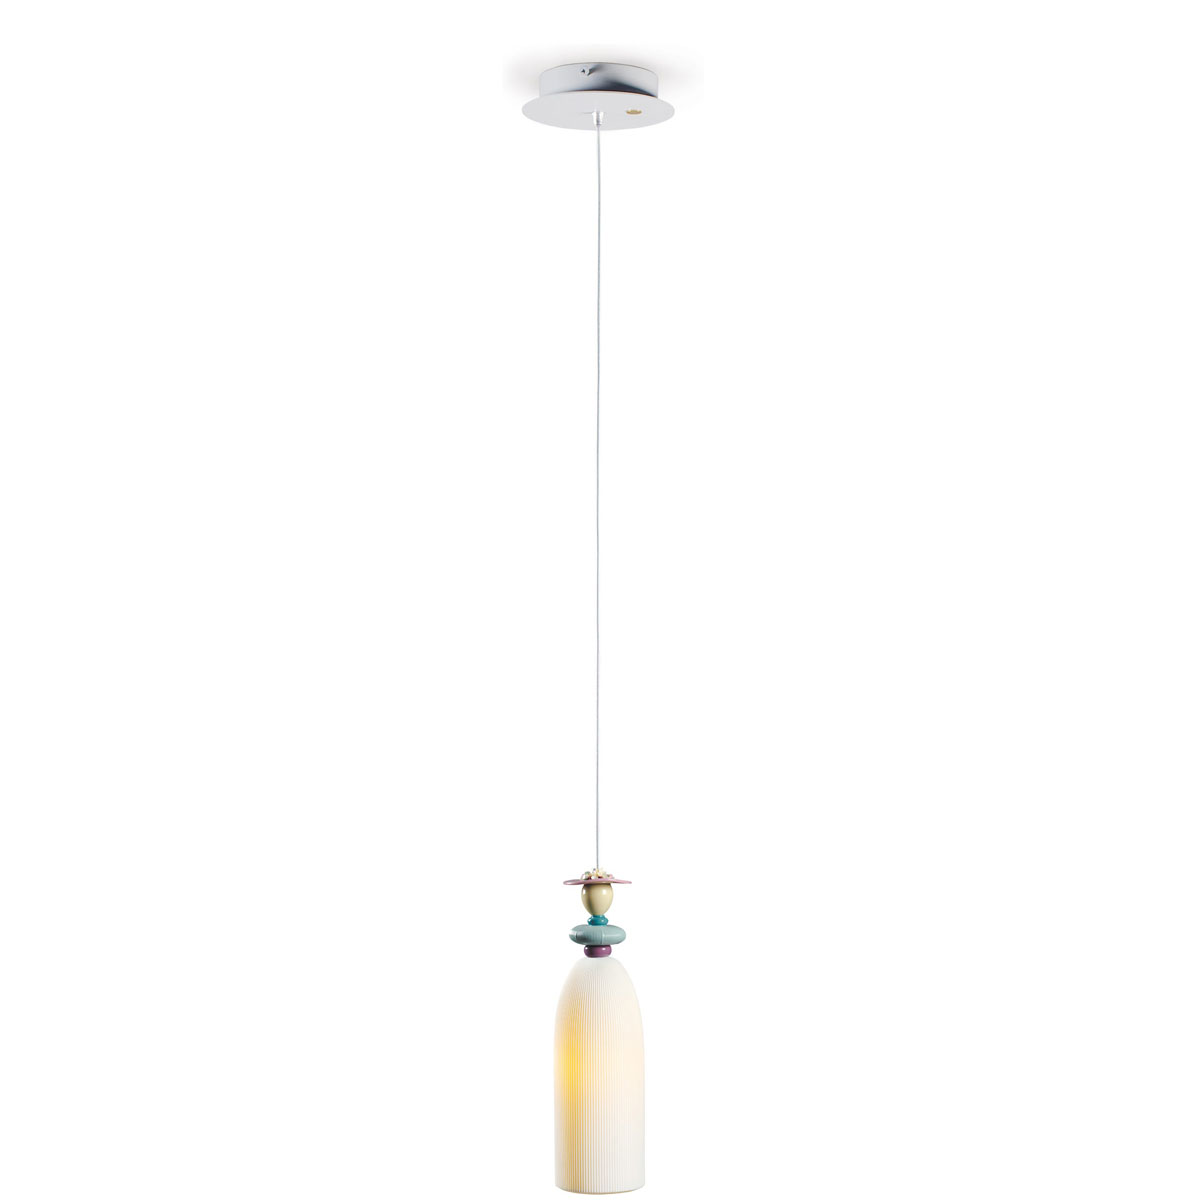 Lladro Classic Lighting, Mademoiselle CLia Ceiling Lamp